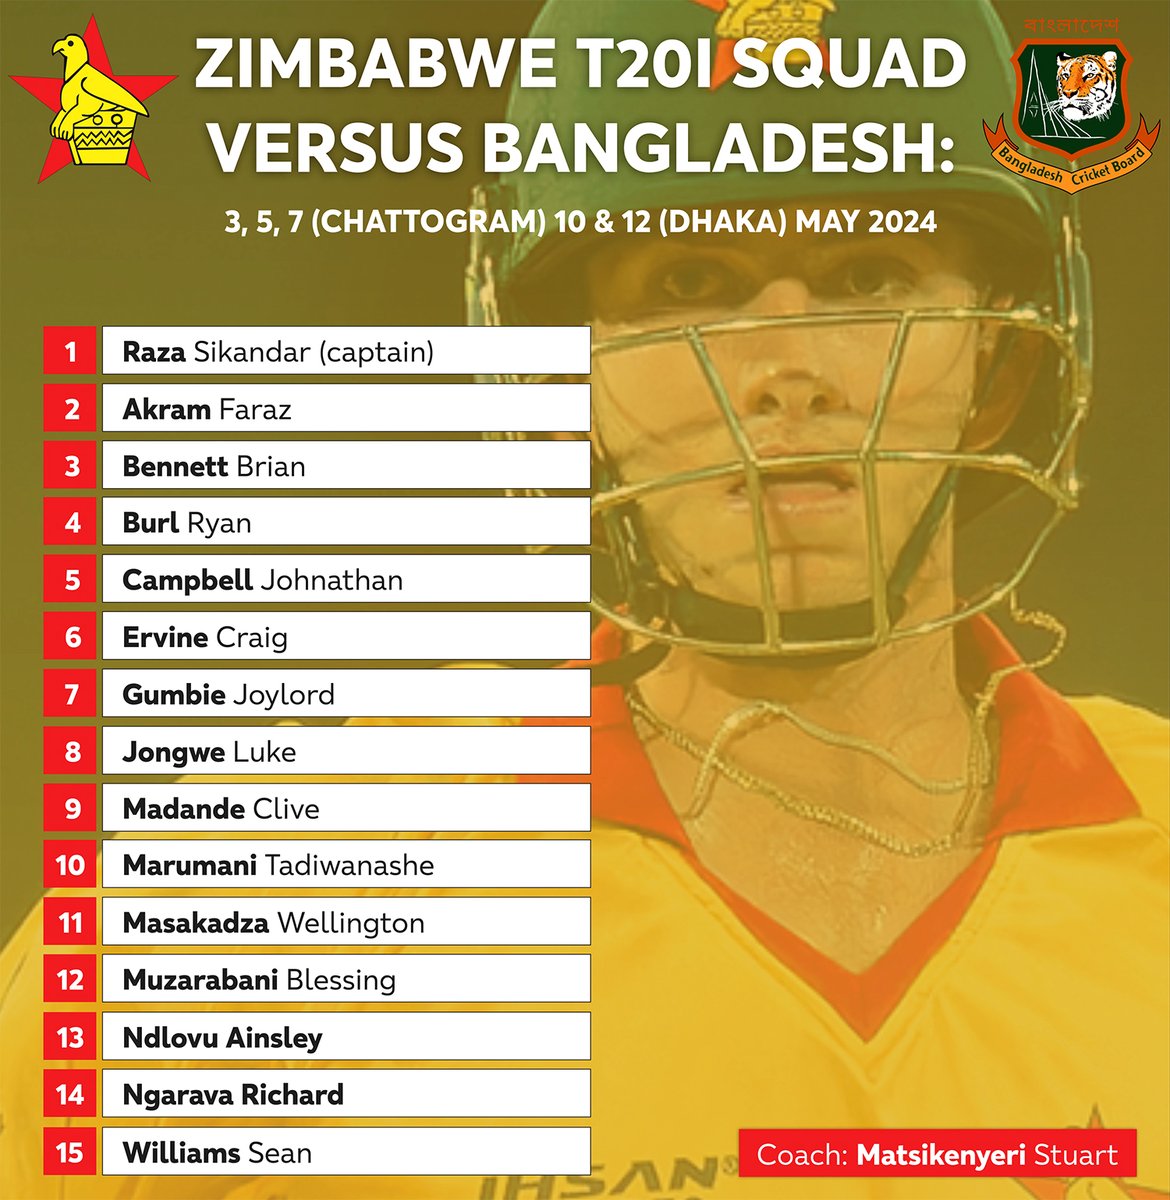 Zimbabwe name squad for T20I series in Bangladesh Details 🔽 zimcricket.org/news/2948/Zimb…